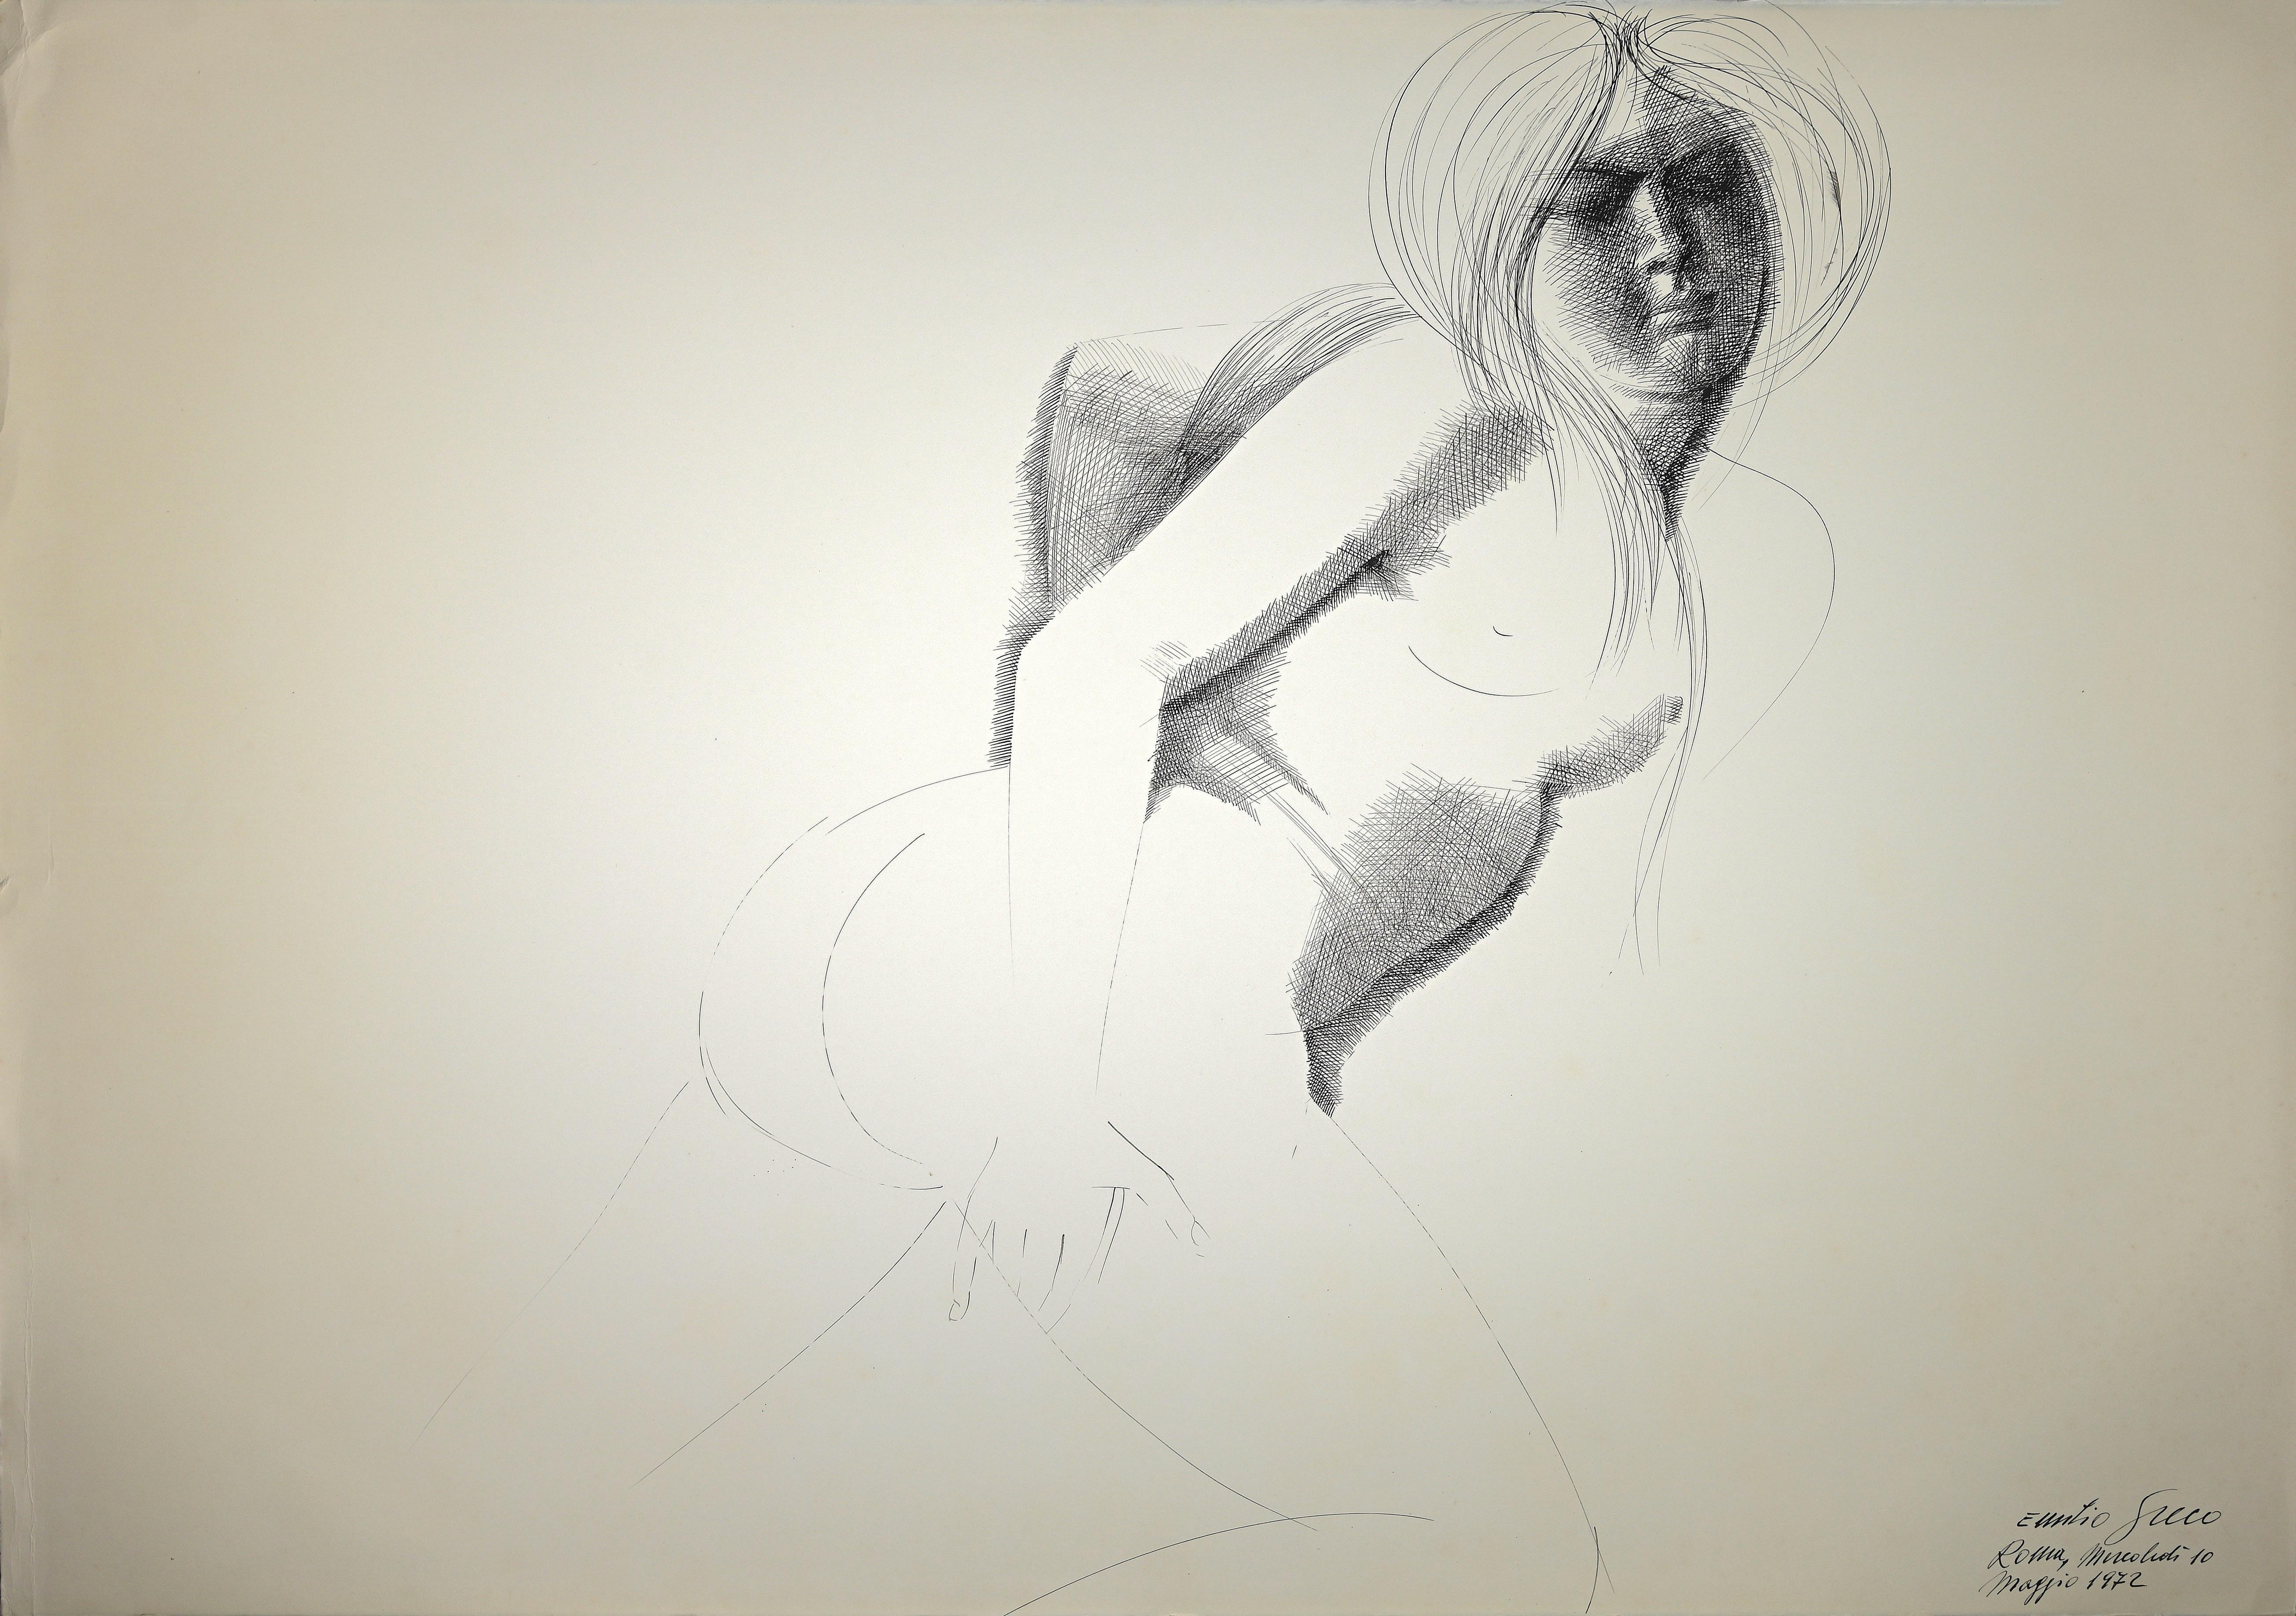 Emilio Greco Figurative Art - Nude - China Ink Drawing by E. Greco - 1972